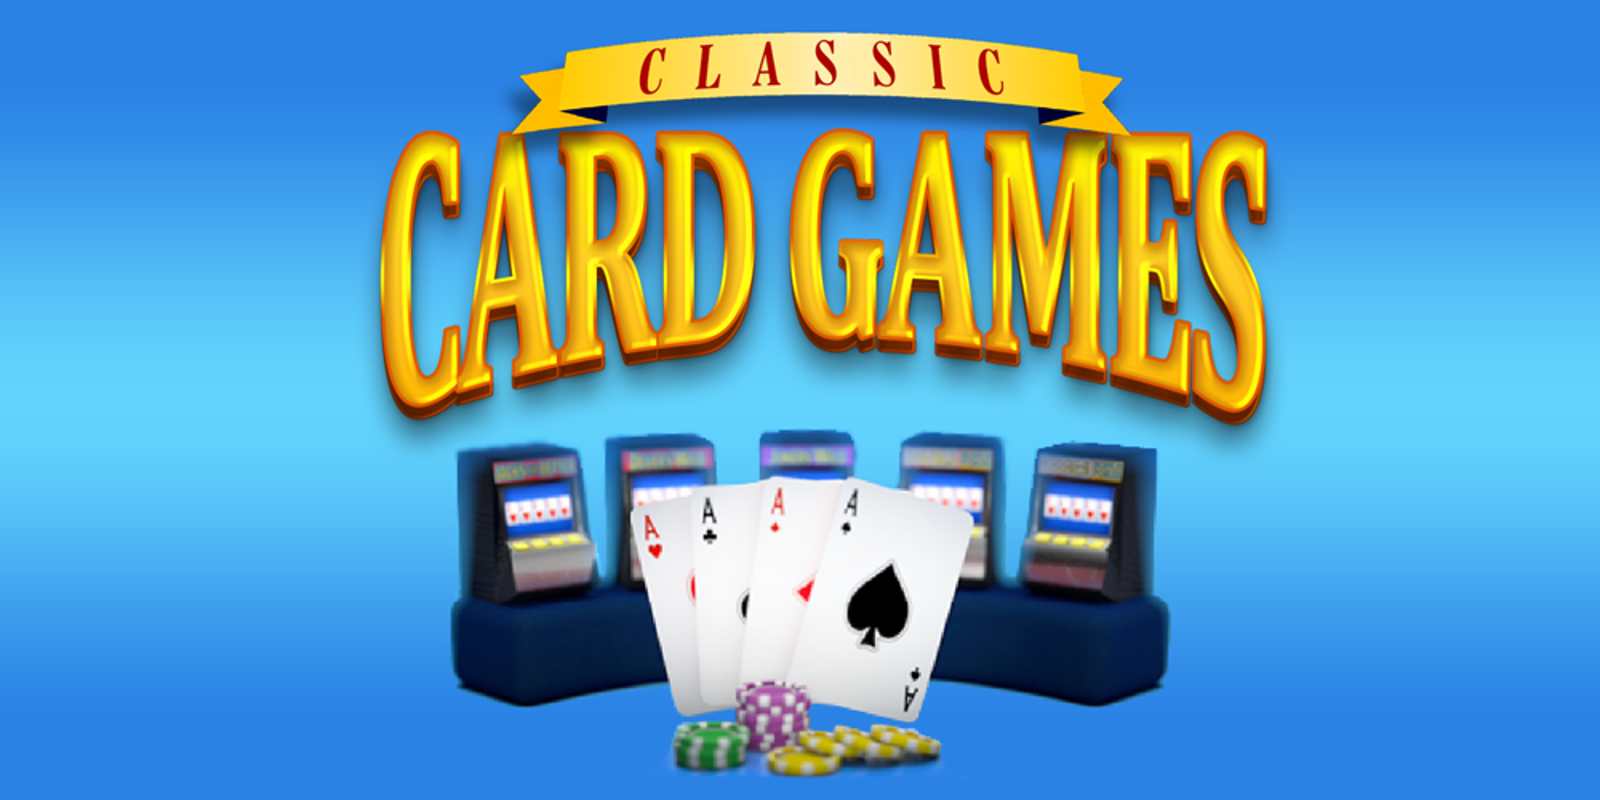 Classic Card Games | Nintendo 3DS download software | Games | Nintendo1600 x 800